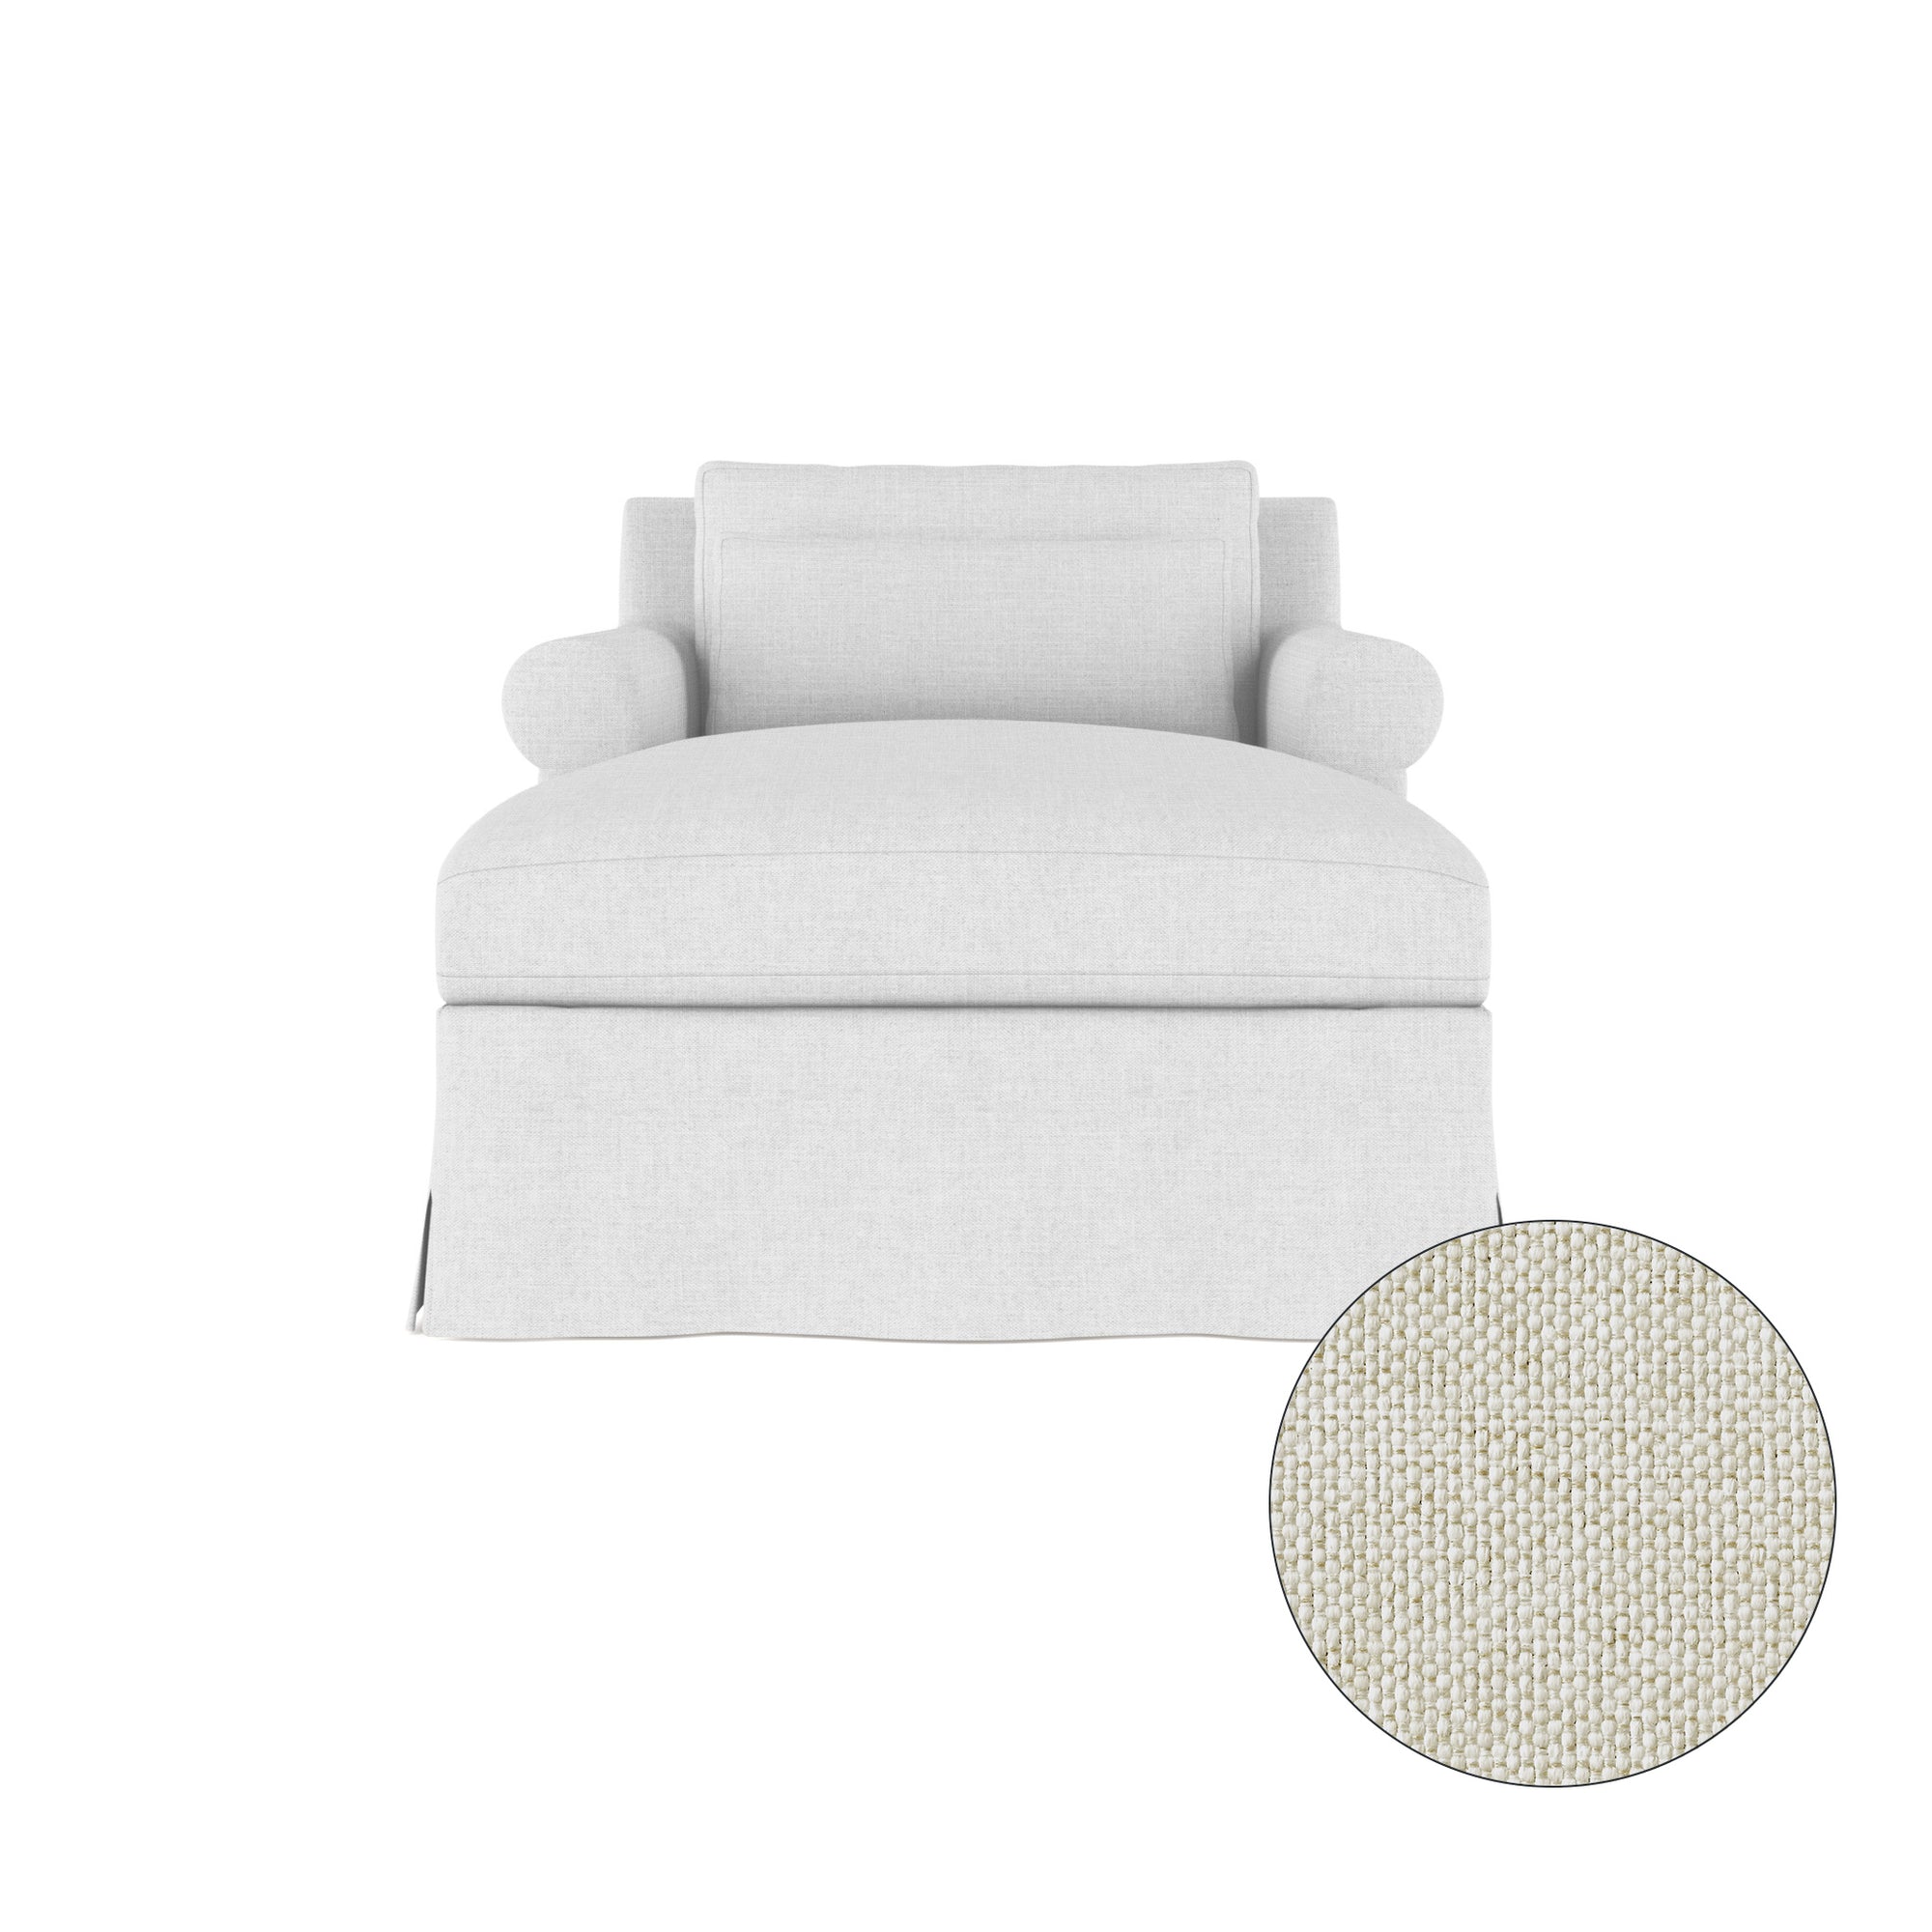 Ludlow Chaise - Alabaster Pebble Weave Linen